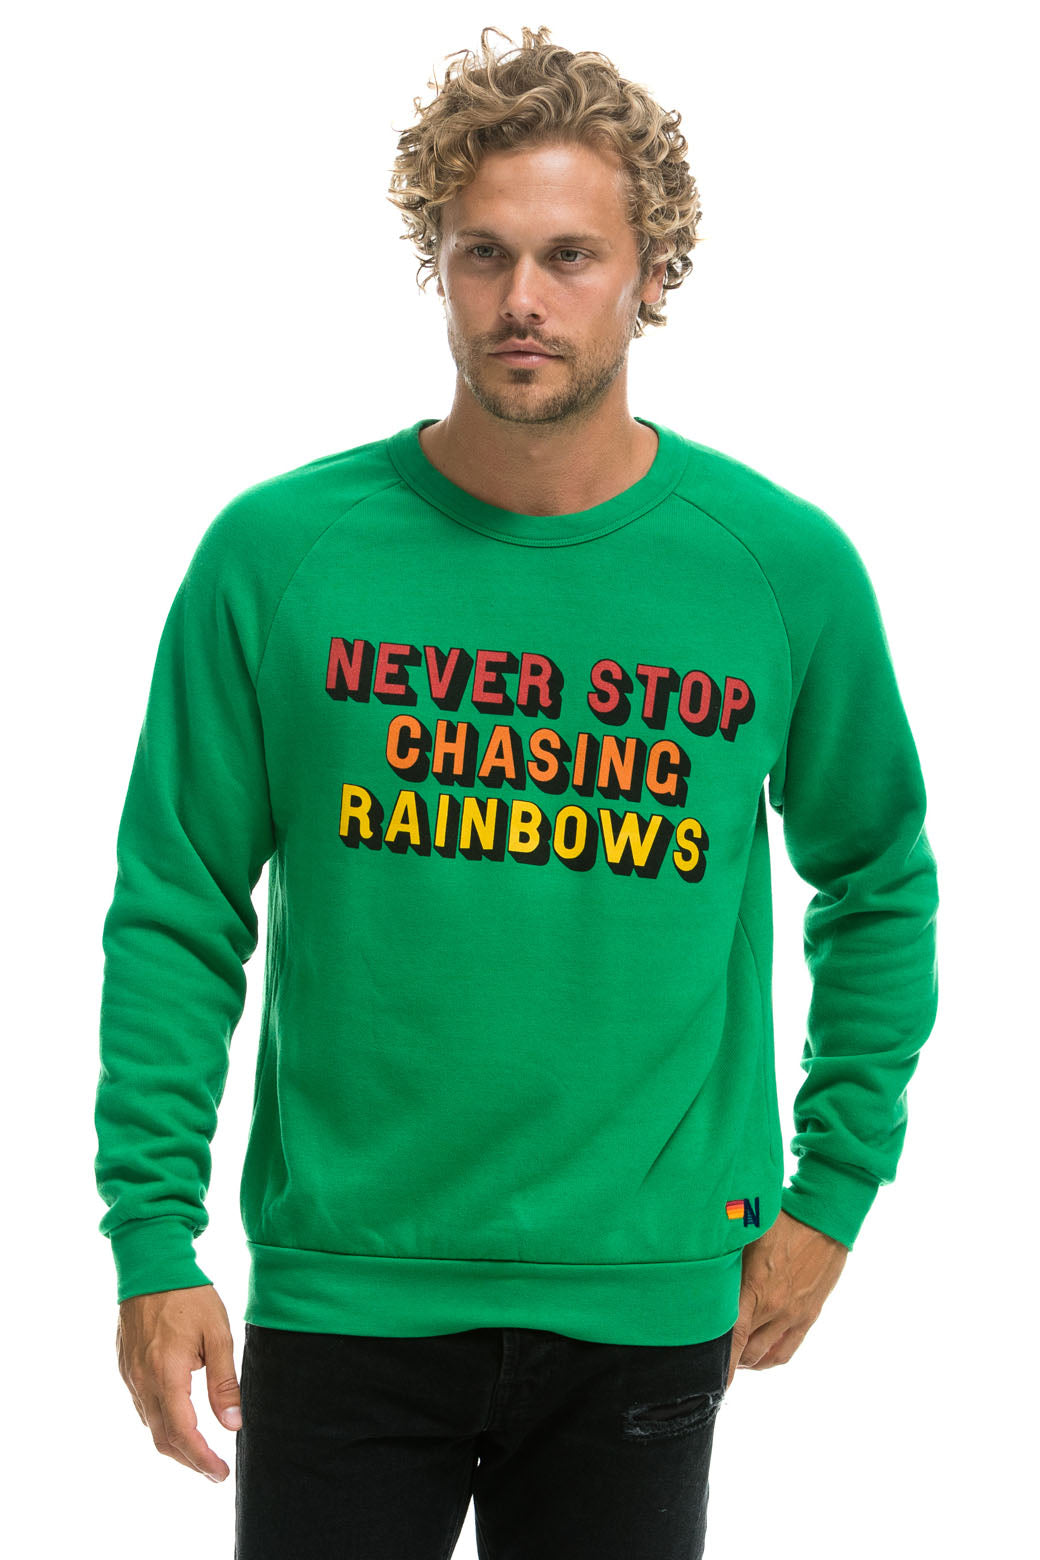 NEVER STOP CHASING RAINBOWS CREW SWEATSHIRT - KELLY GREEN Sweatshirt Aviator Nation 